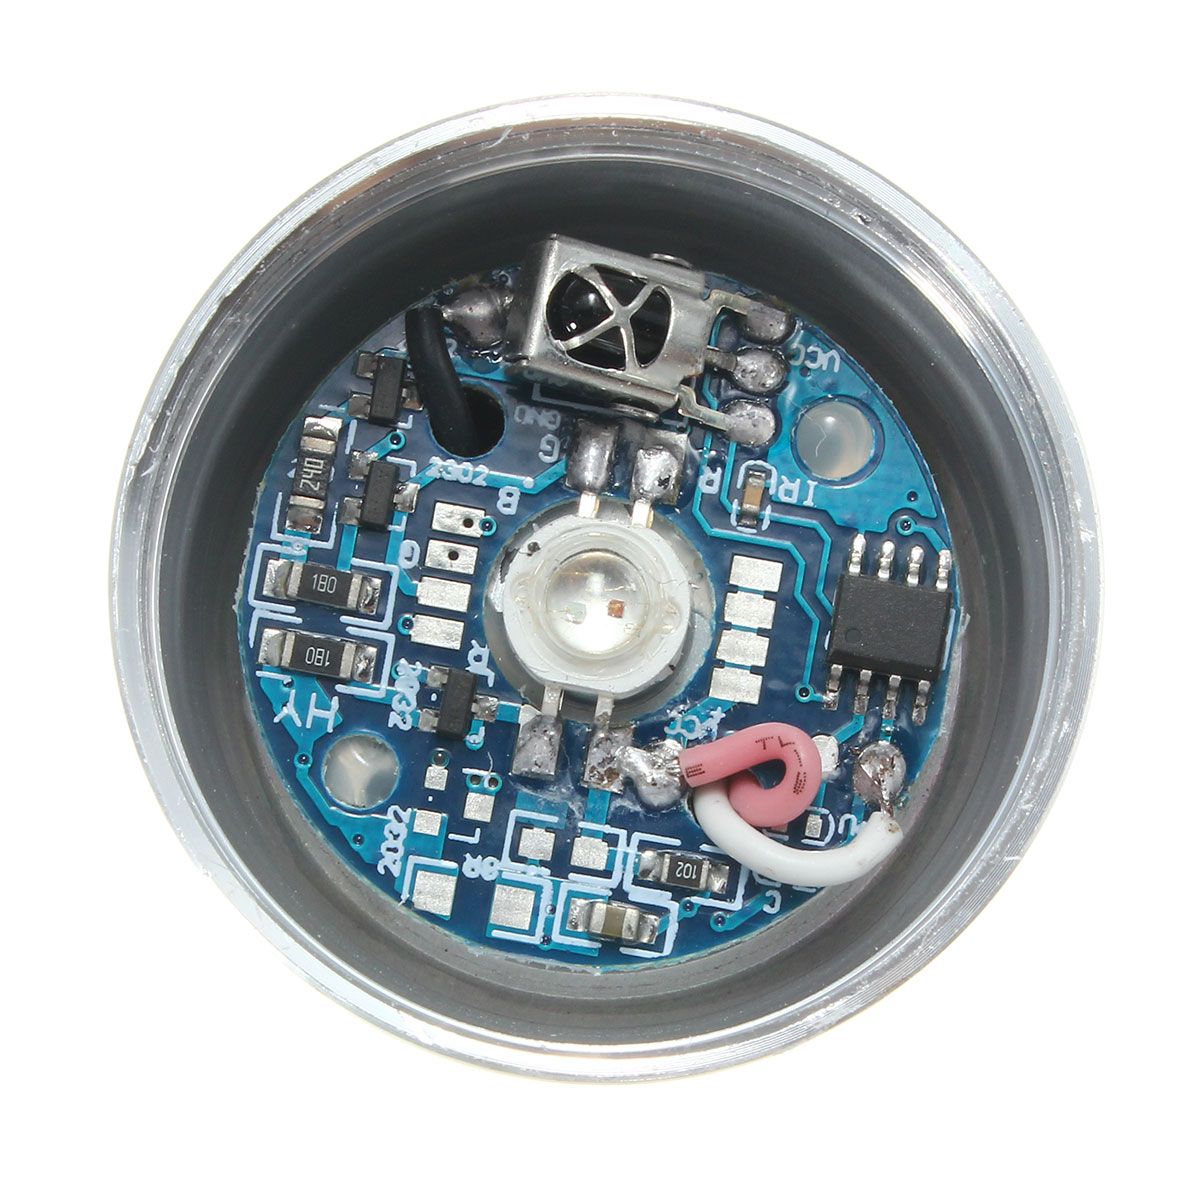 E27-E14-GU10-3W-Dimmable-Remote-Control-RGB-Color-Change-LED-Lamp-Light-Bulb-85-265V-1137244